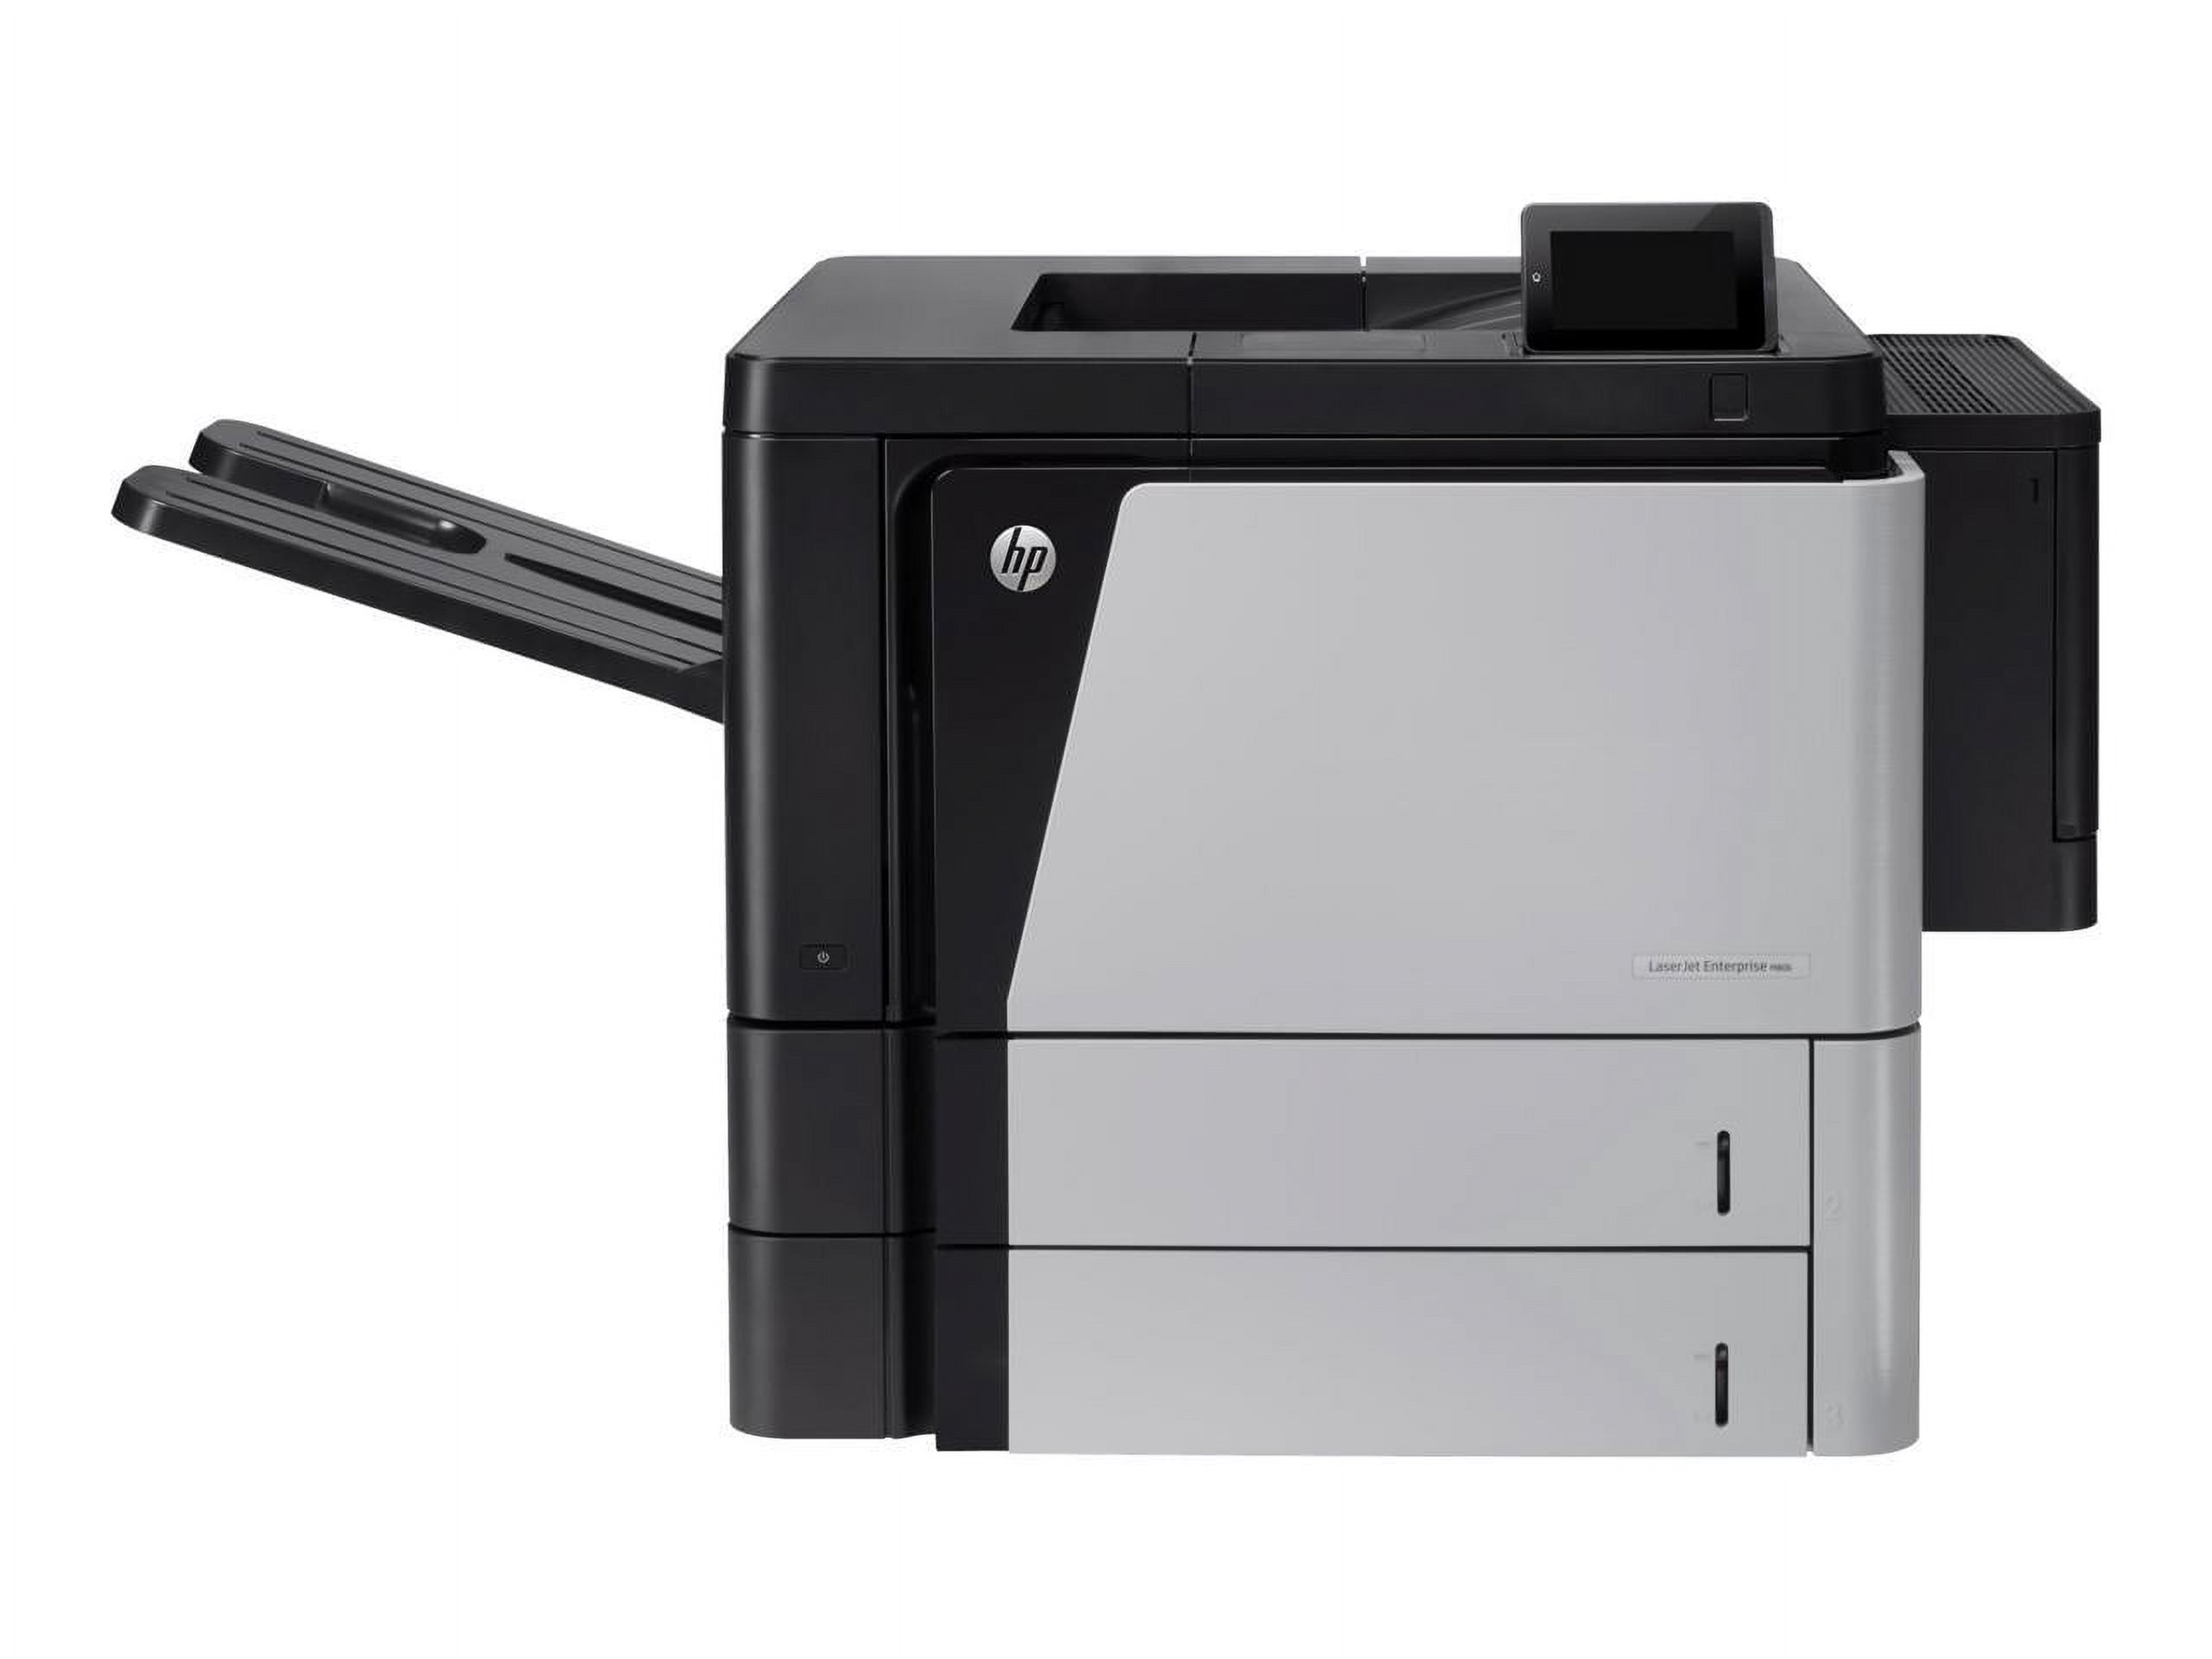 HP LaserJet Enterprise M806dn (CZ244A) 1200 x 1200 dpi USB / Ethernt Monochrome Laser Printer - image 1 of 4